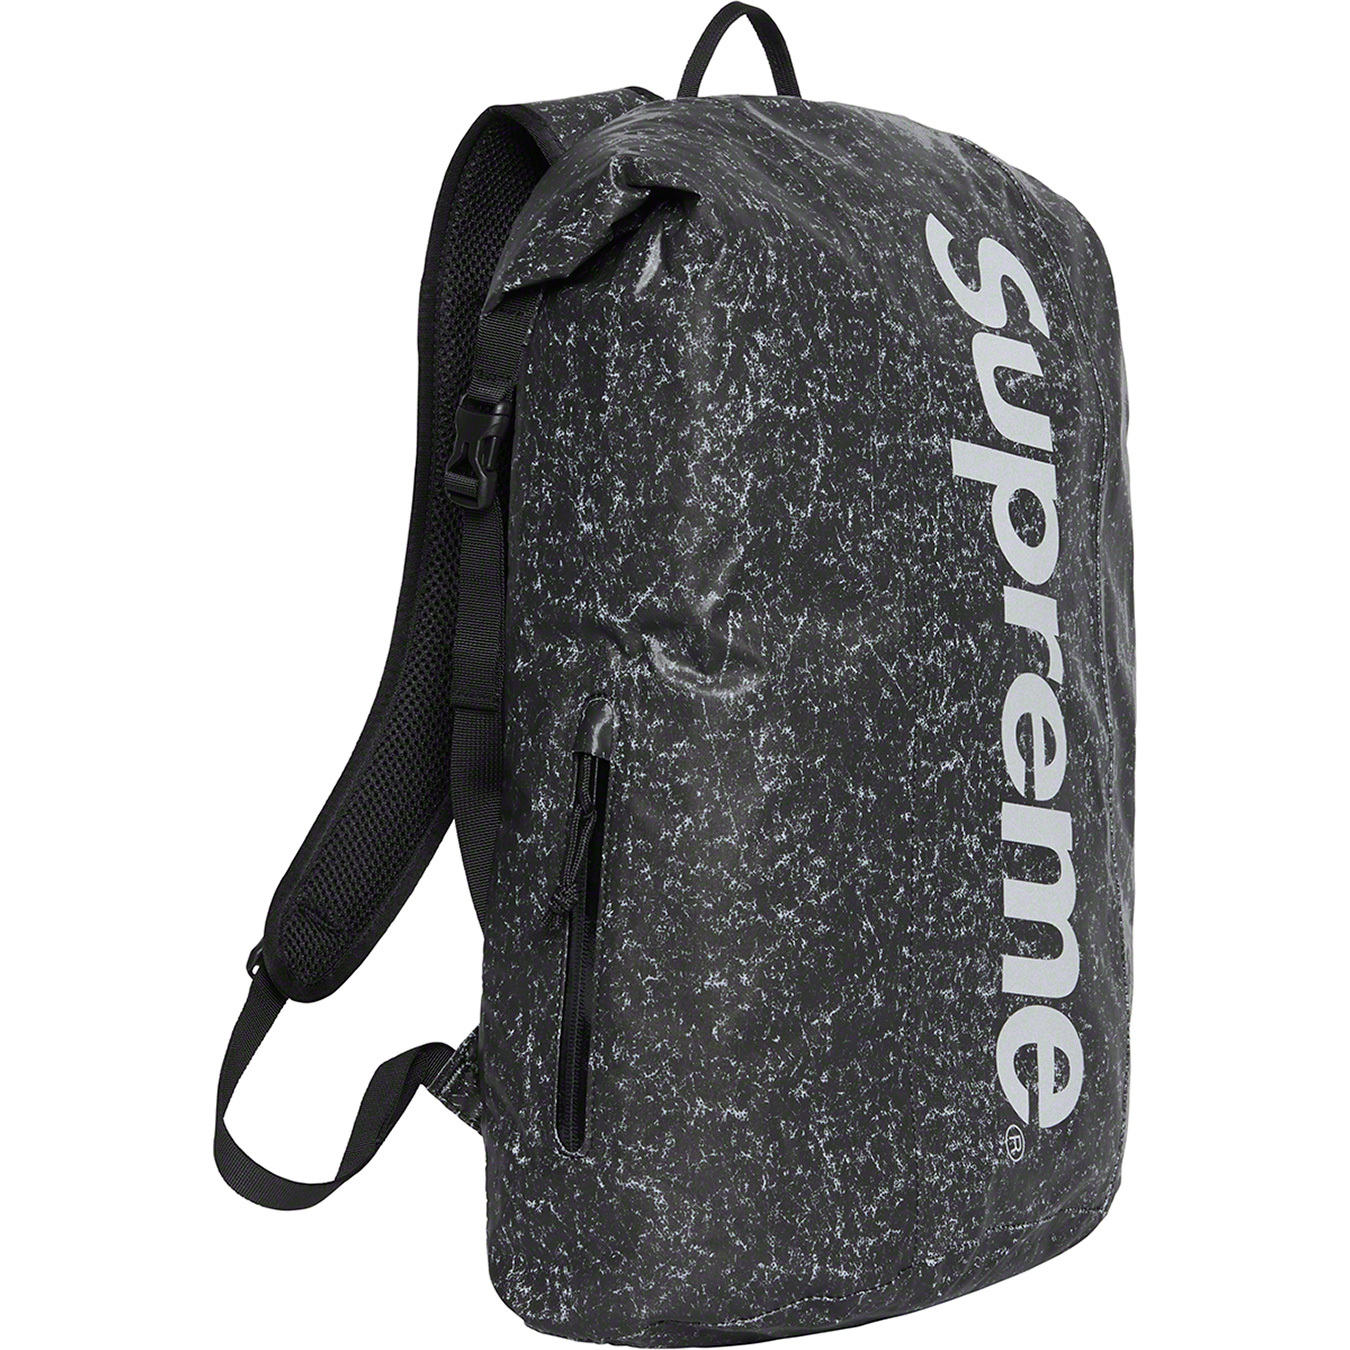 Waterproof Reflective Speckled Backpack - Supreme Community